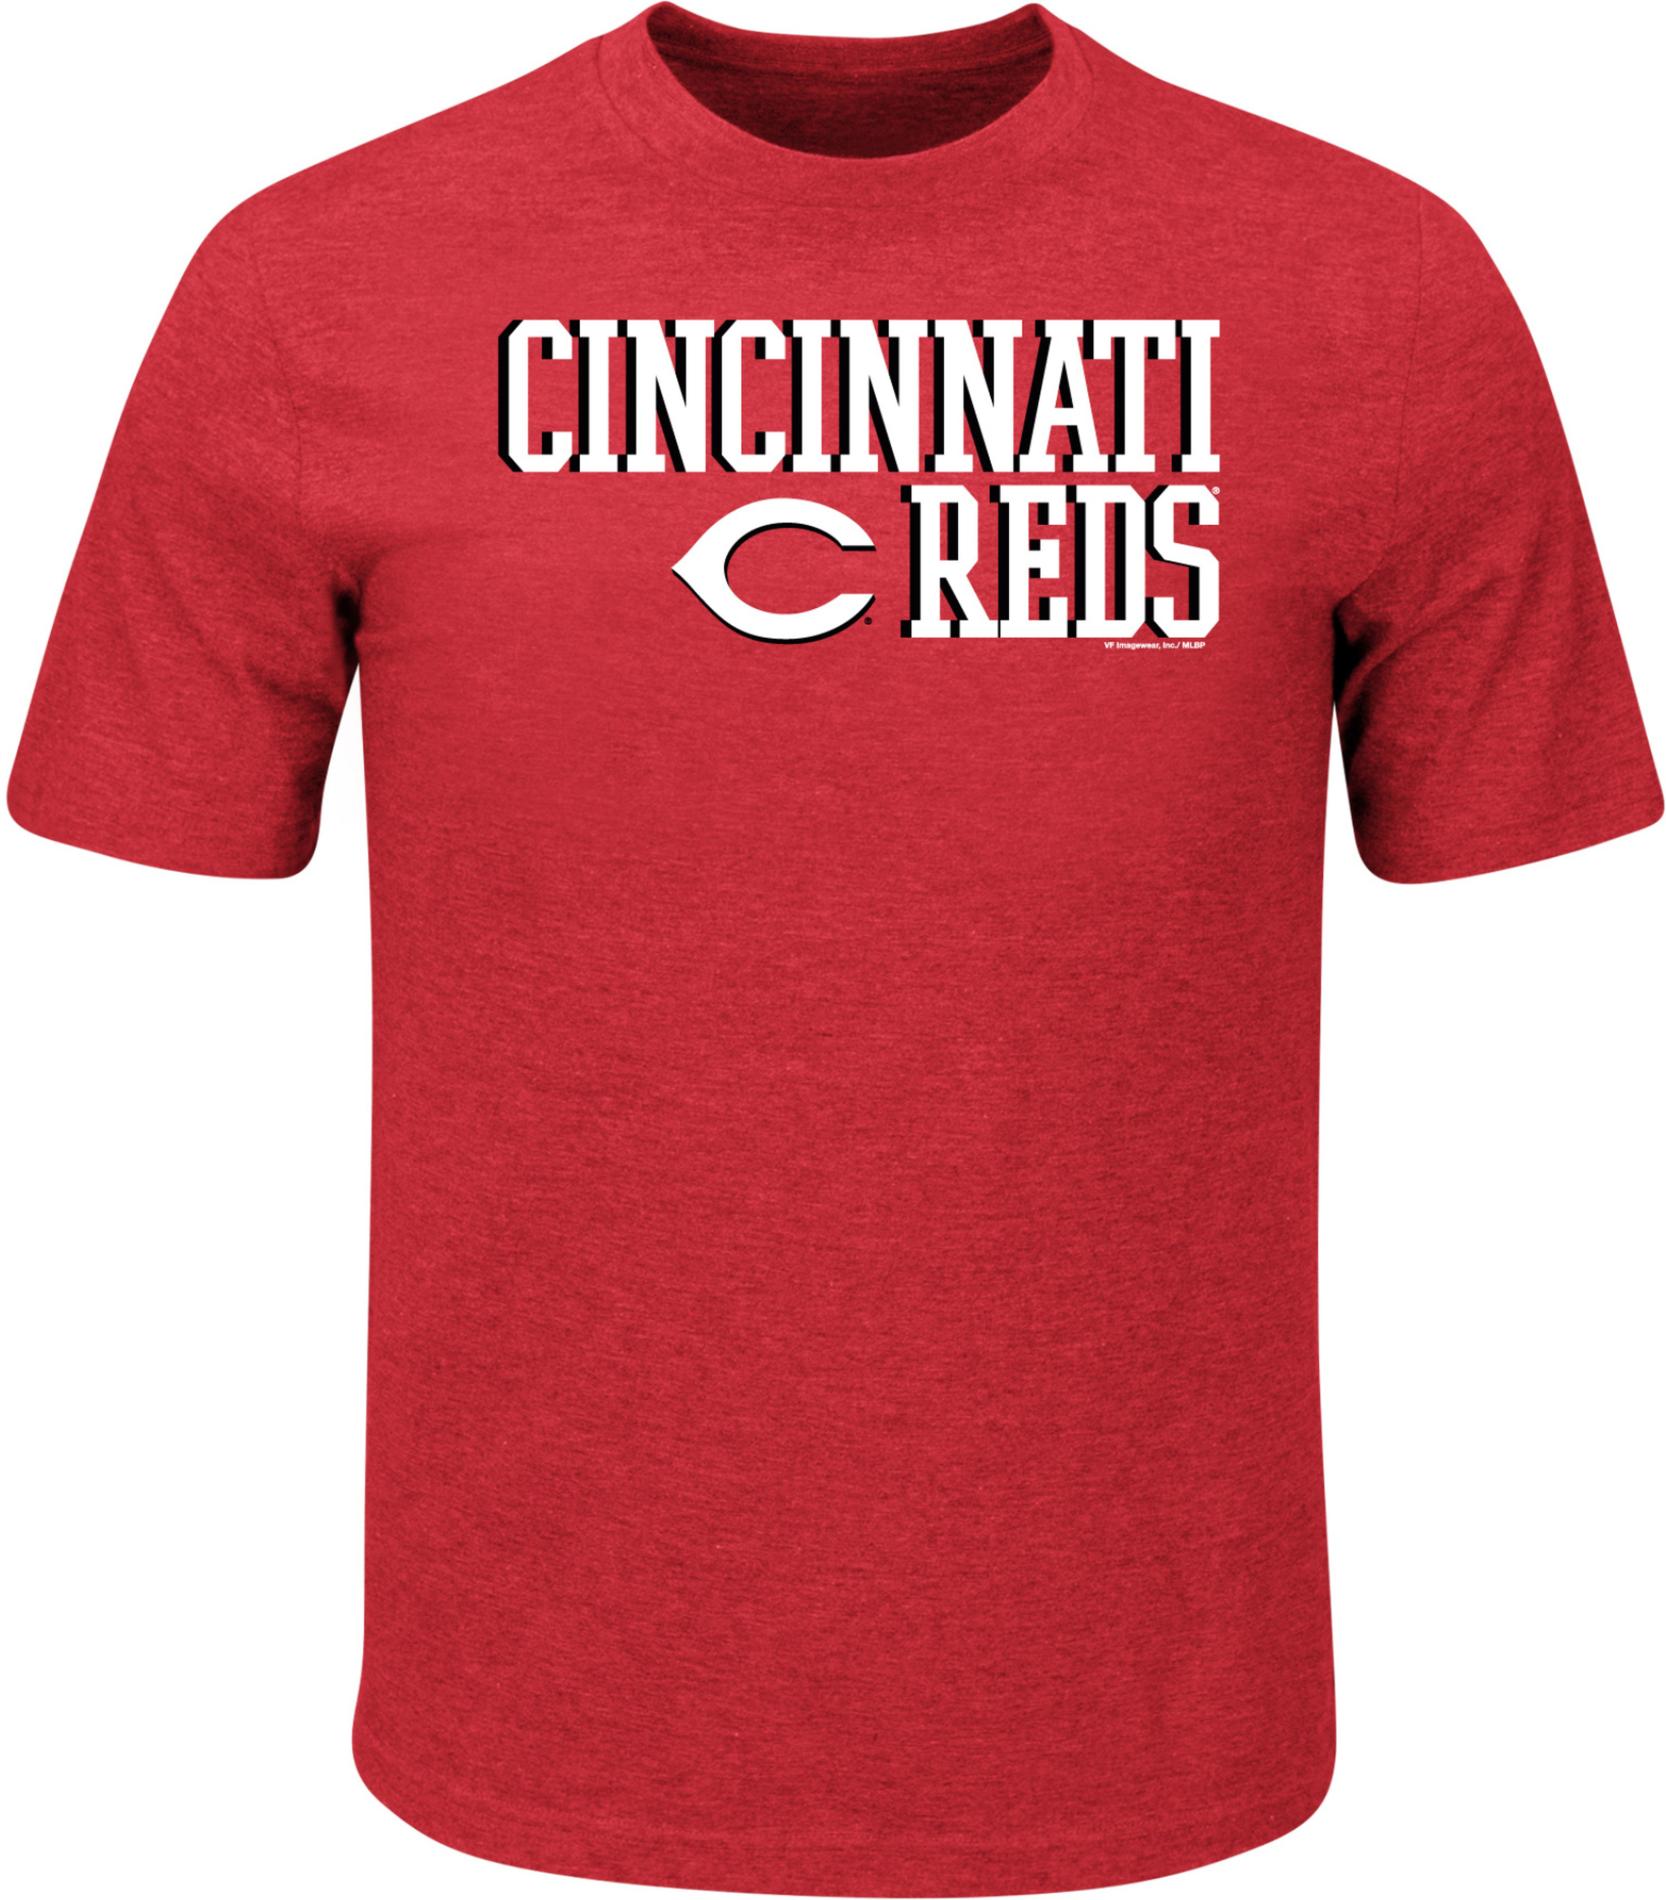 MLB Men's Graphic T-Shirt - Cincinnati Reds